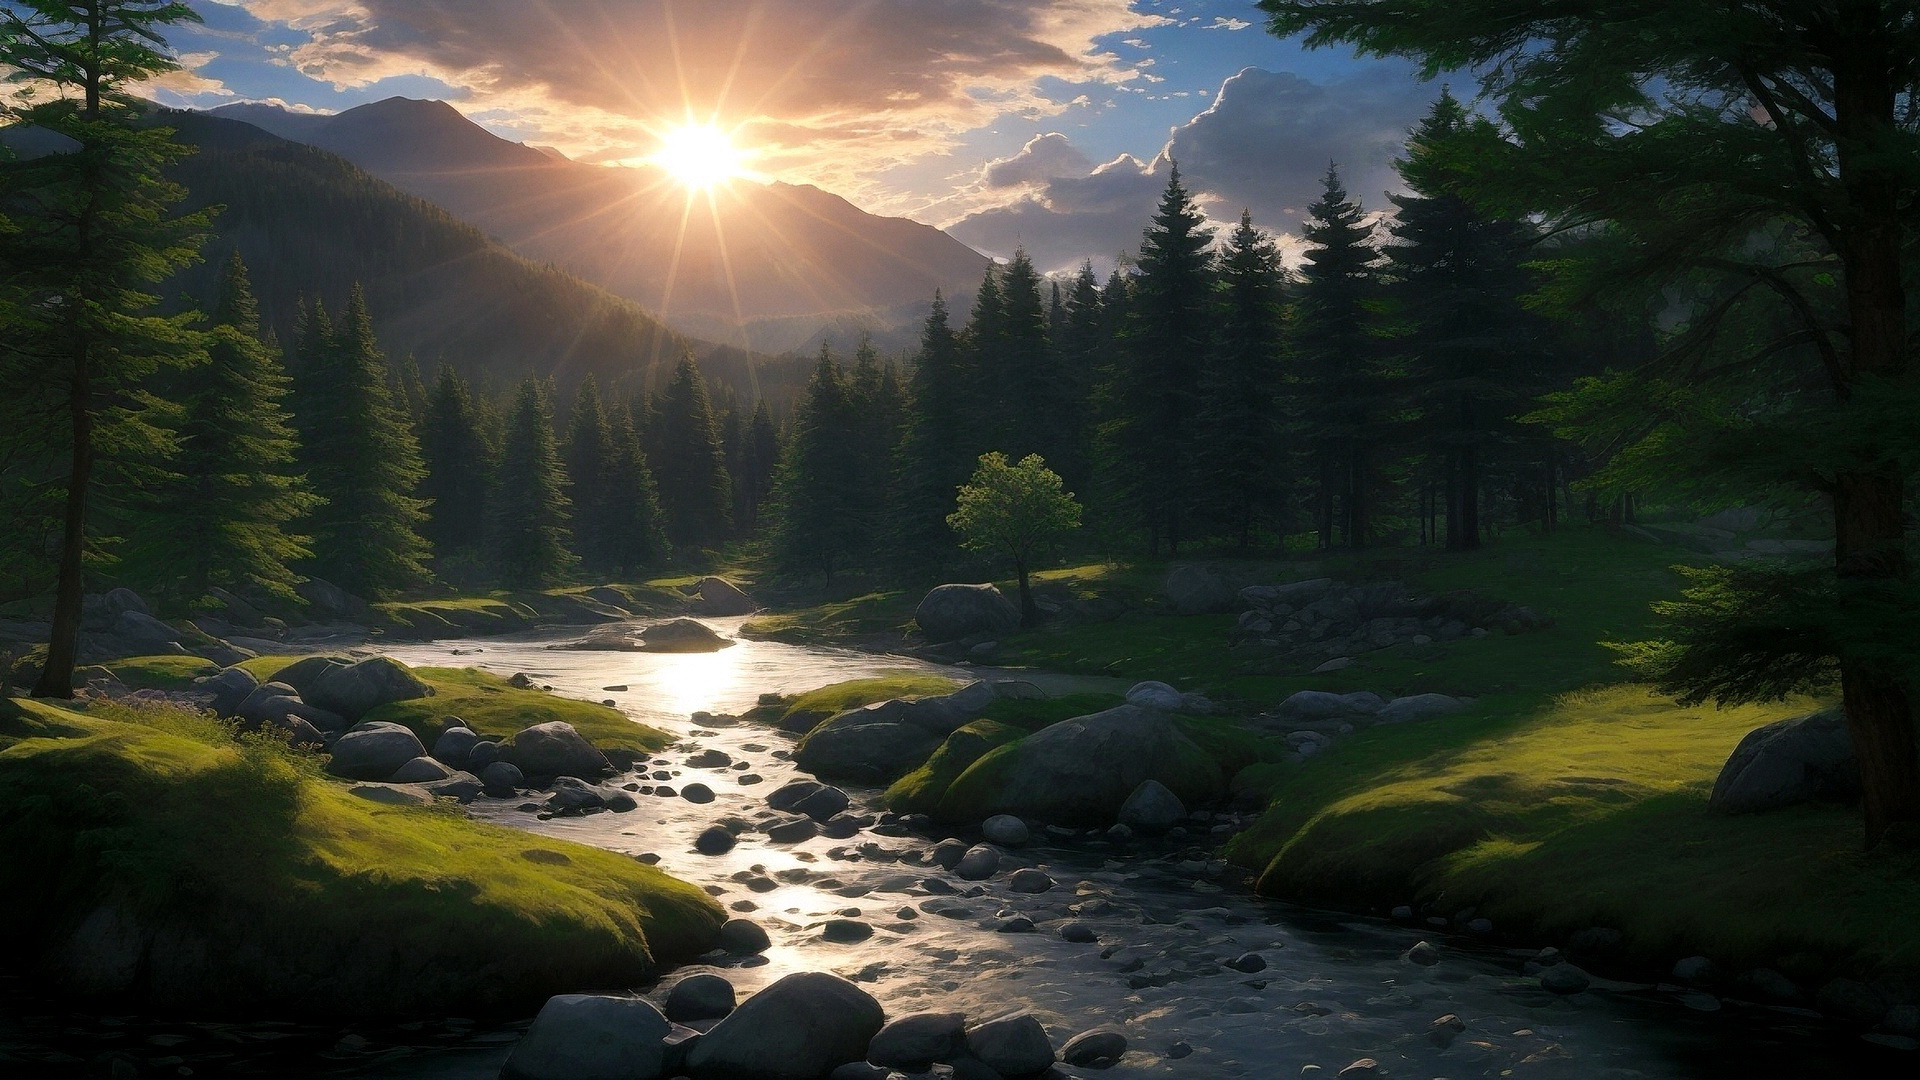 Бесплатное фото Речка в лесу и солнце над горами